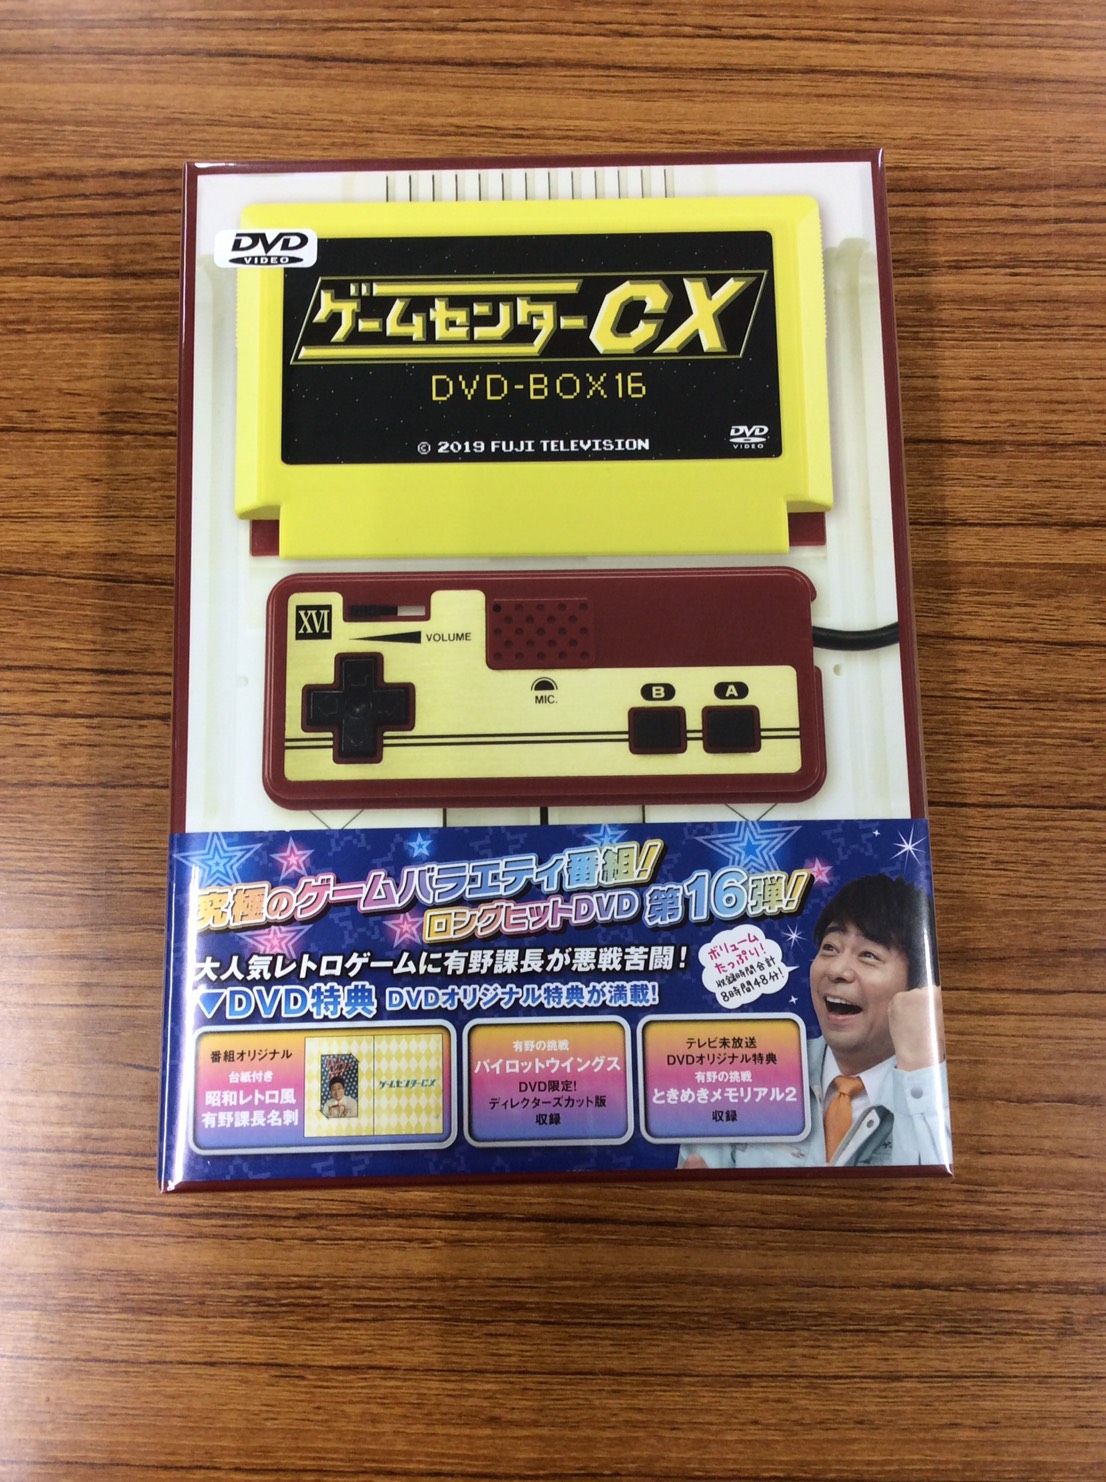 Dvd Dvd Blu Ray入荷情報 艸 ゲームセンターcx Dvdーbox16 万代書店 伊勢崎店